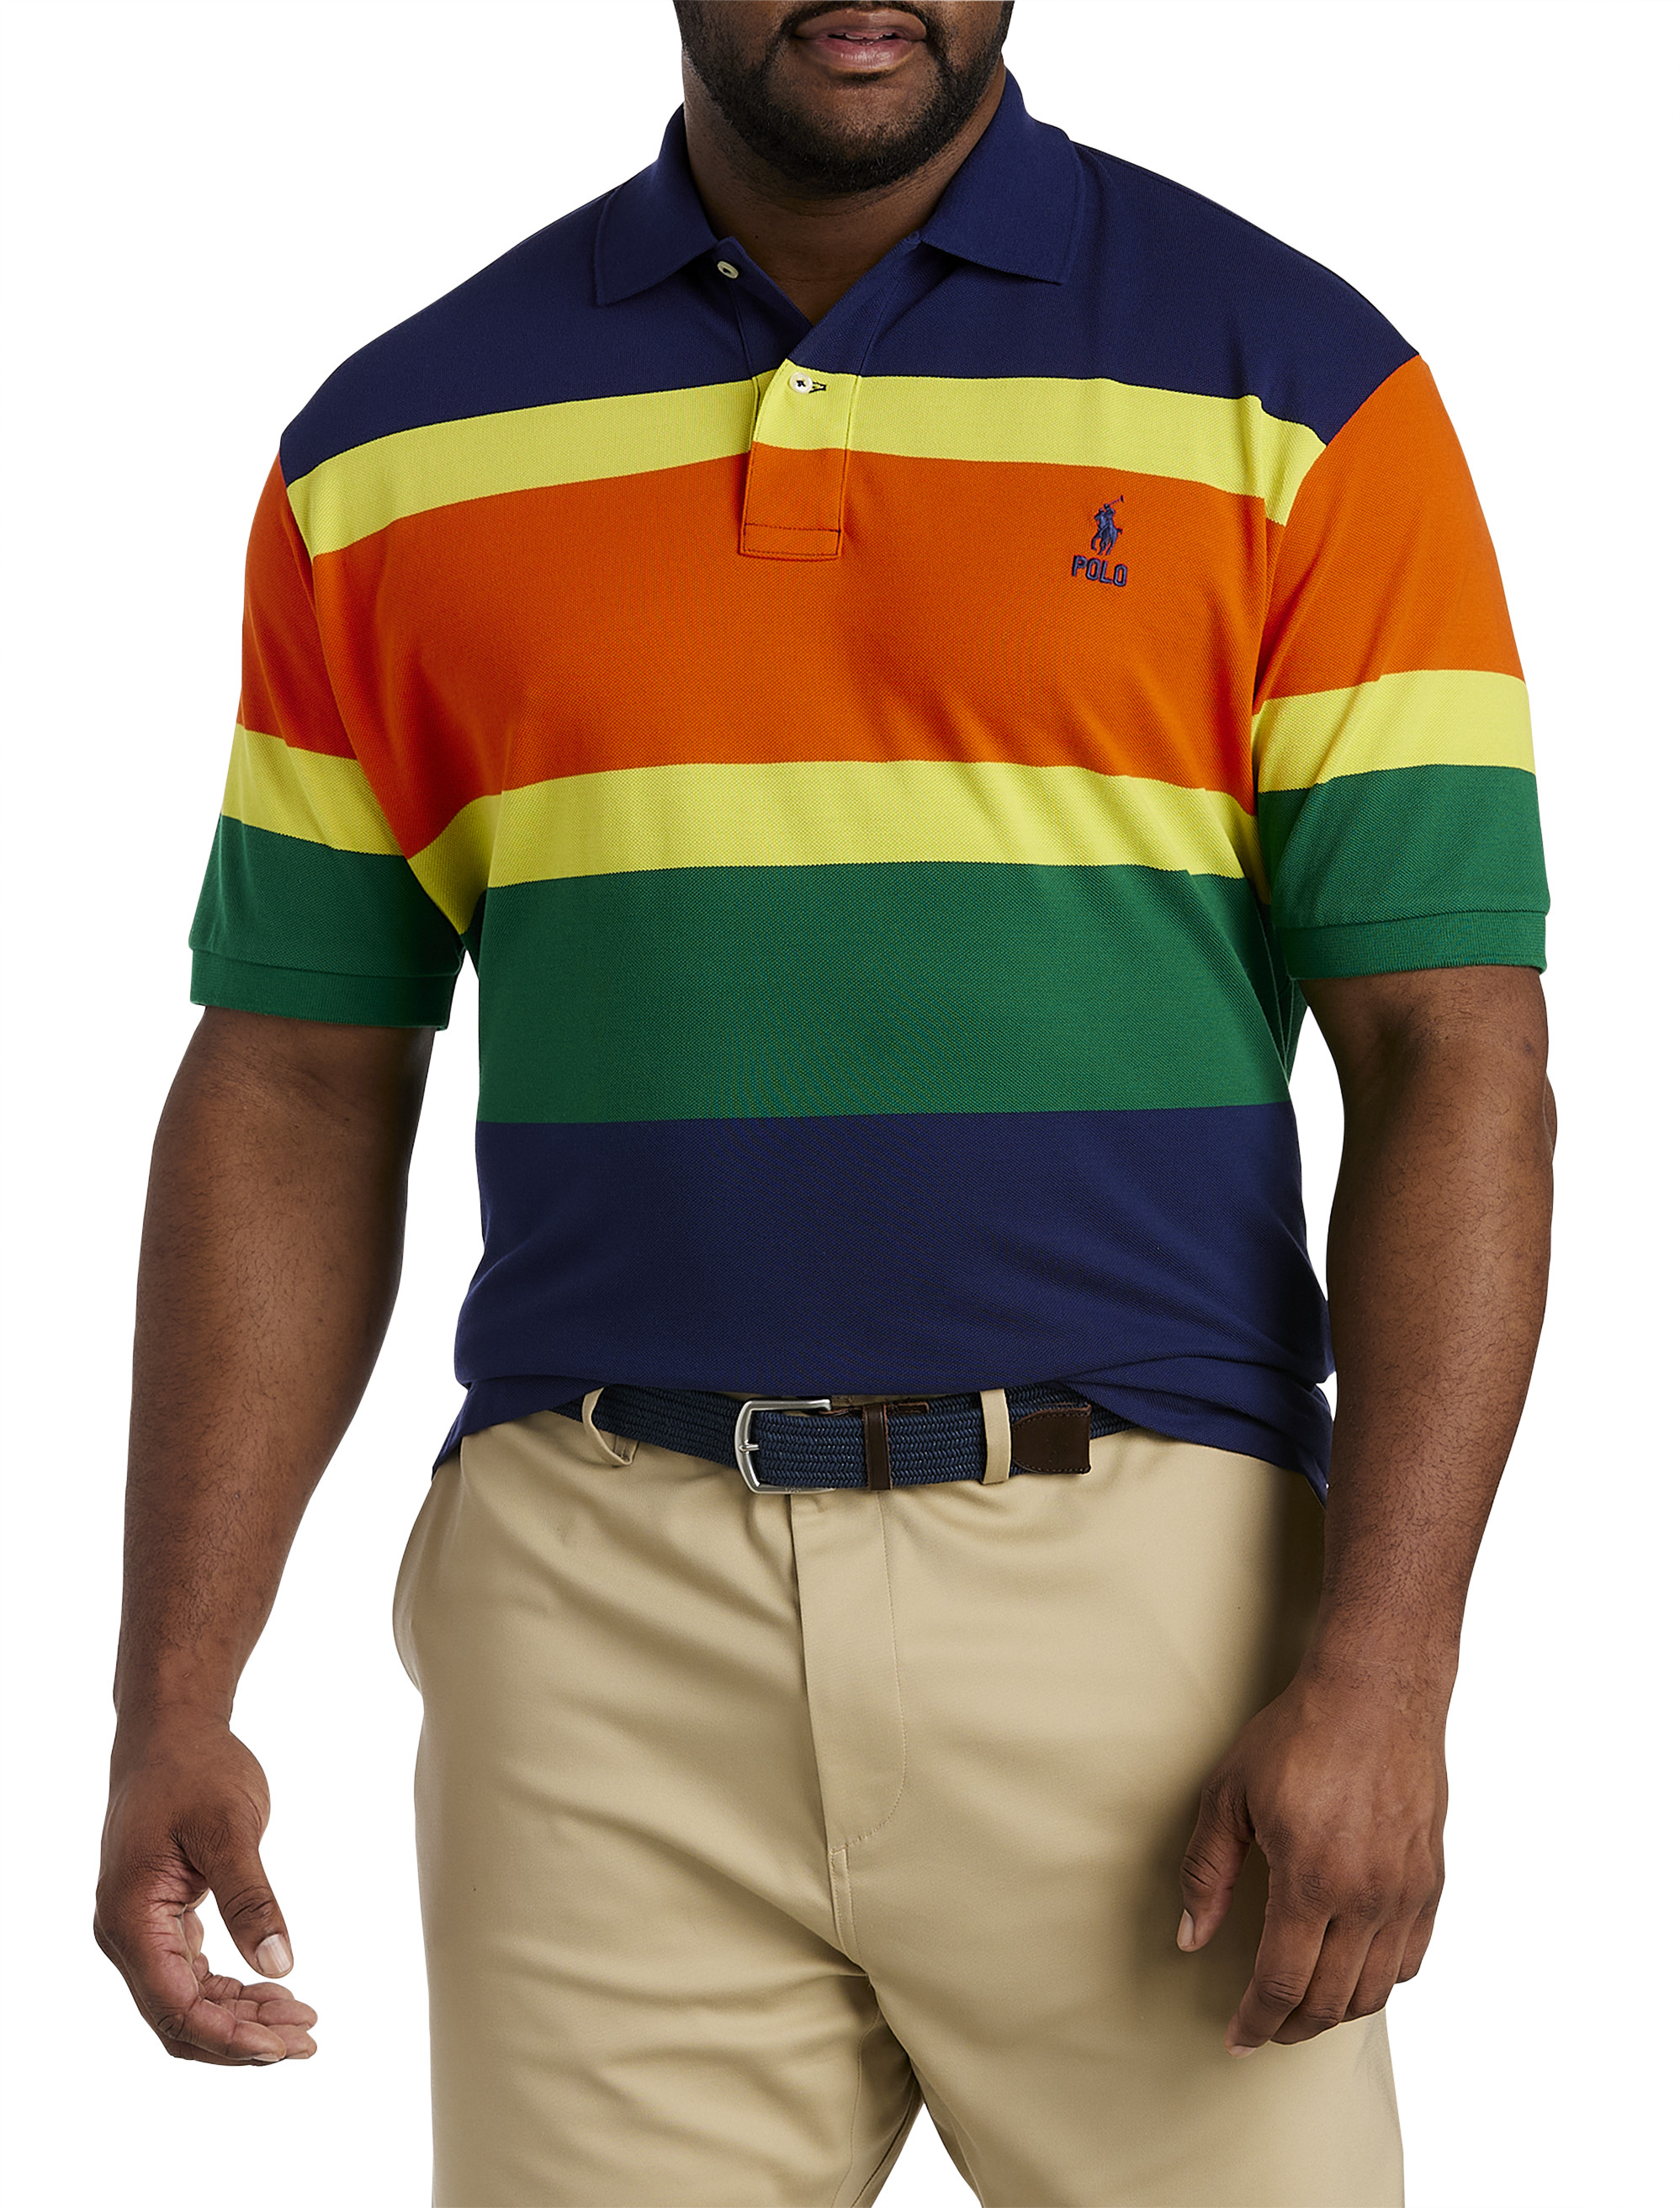 Big + Tall | Polo Ralph Lauren Voyager Striped Mesh Polo Shirt | DXL